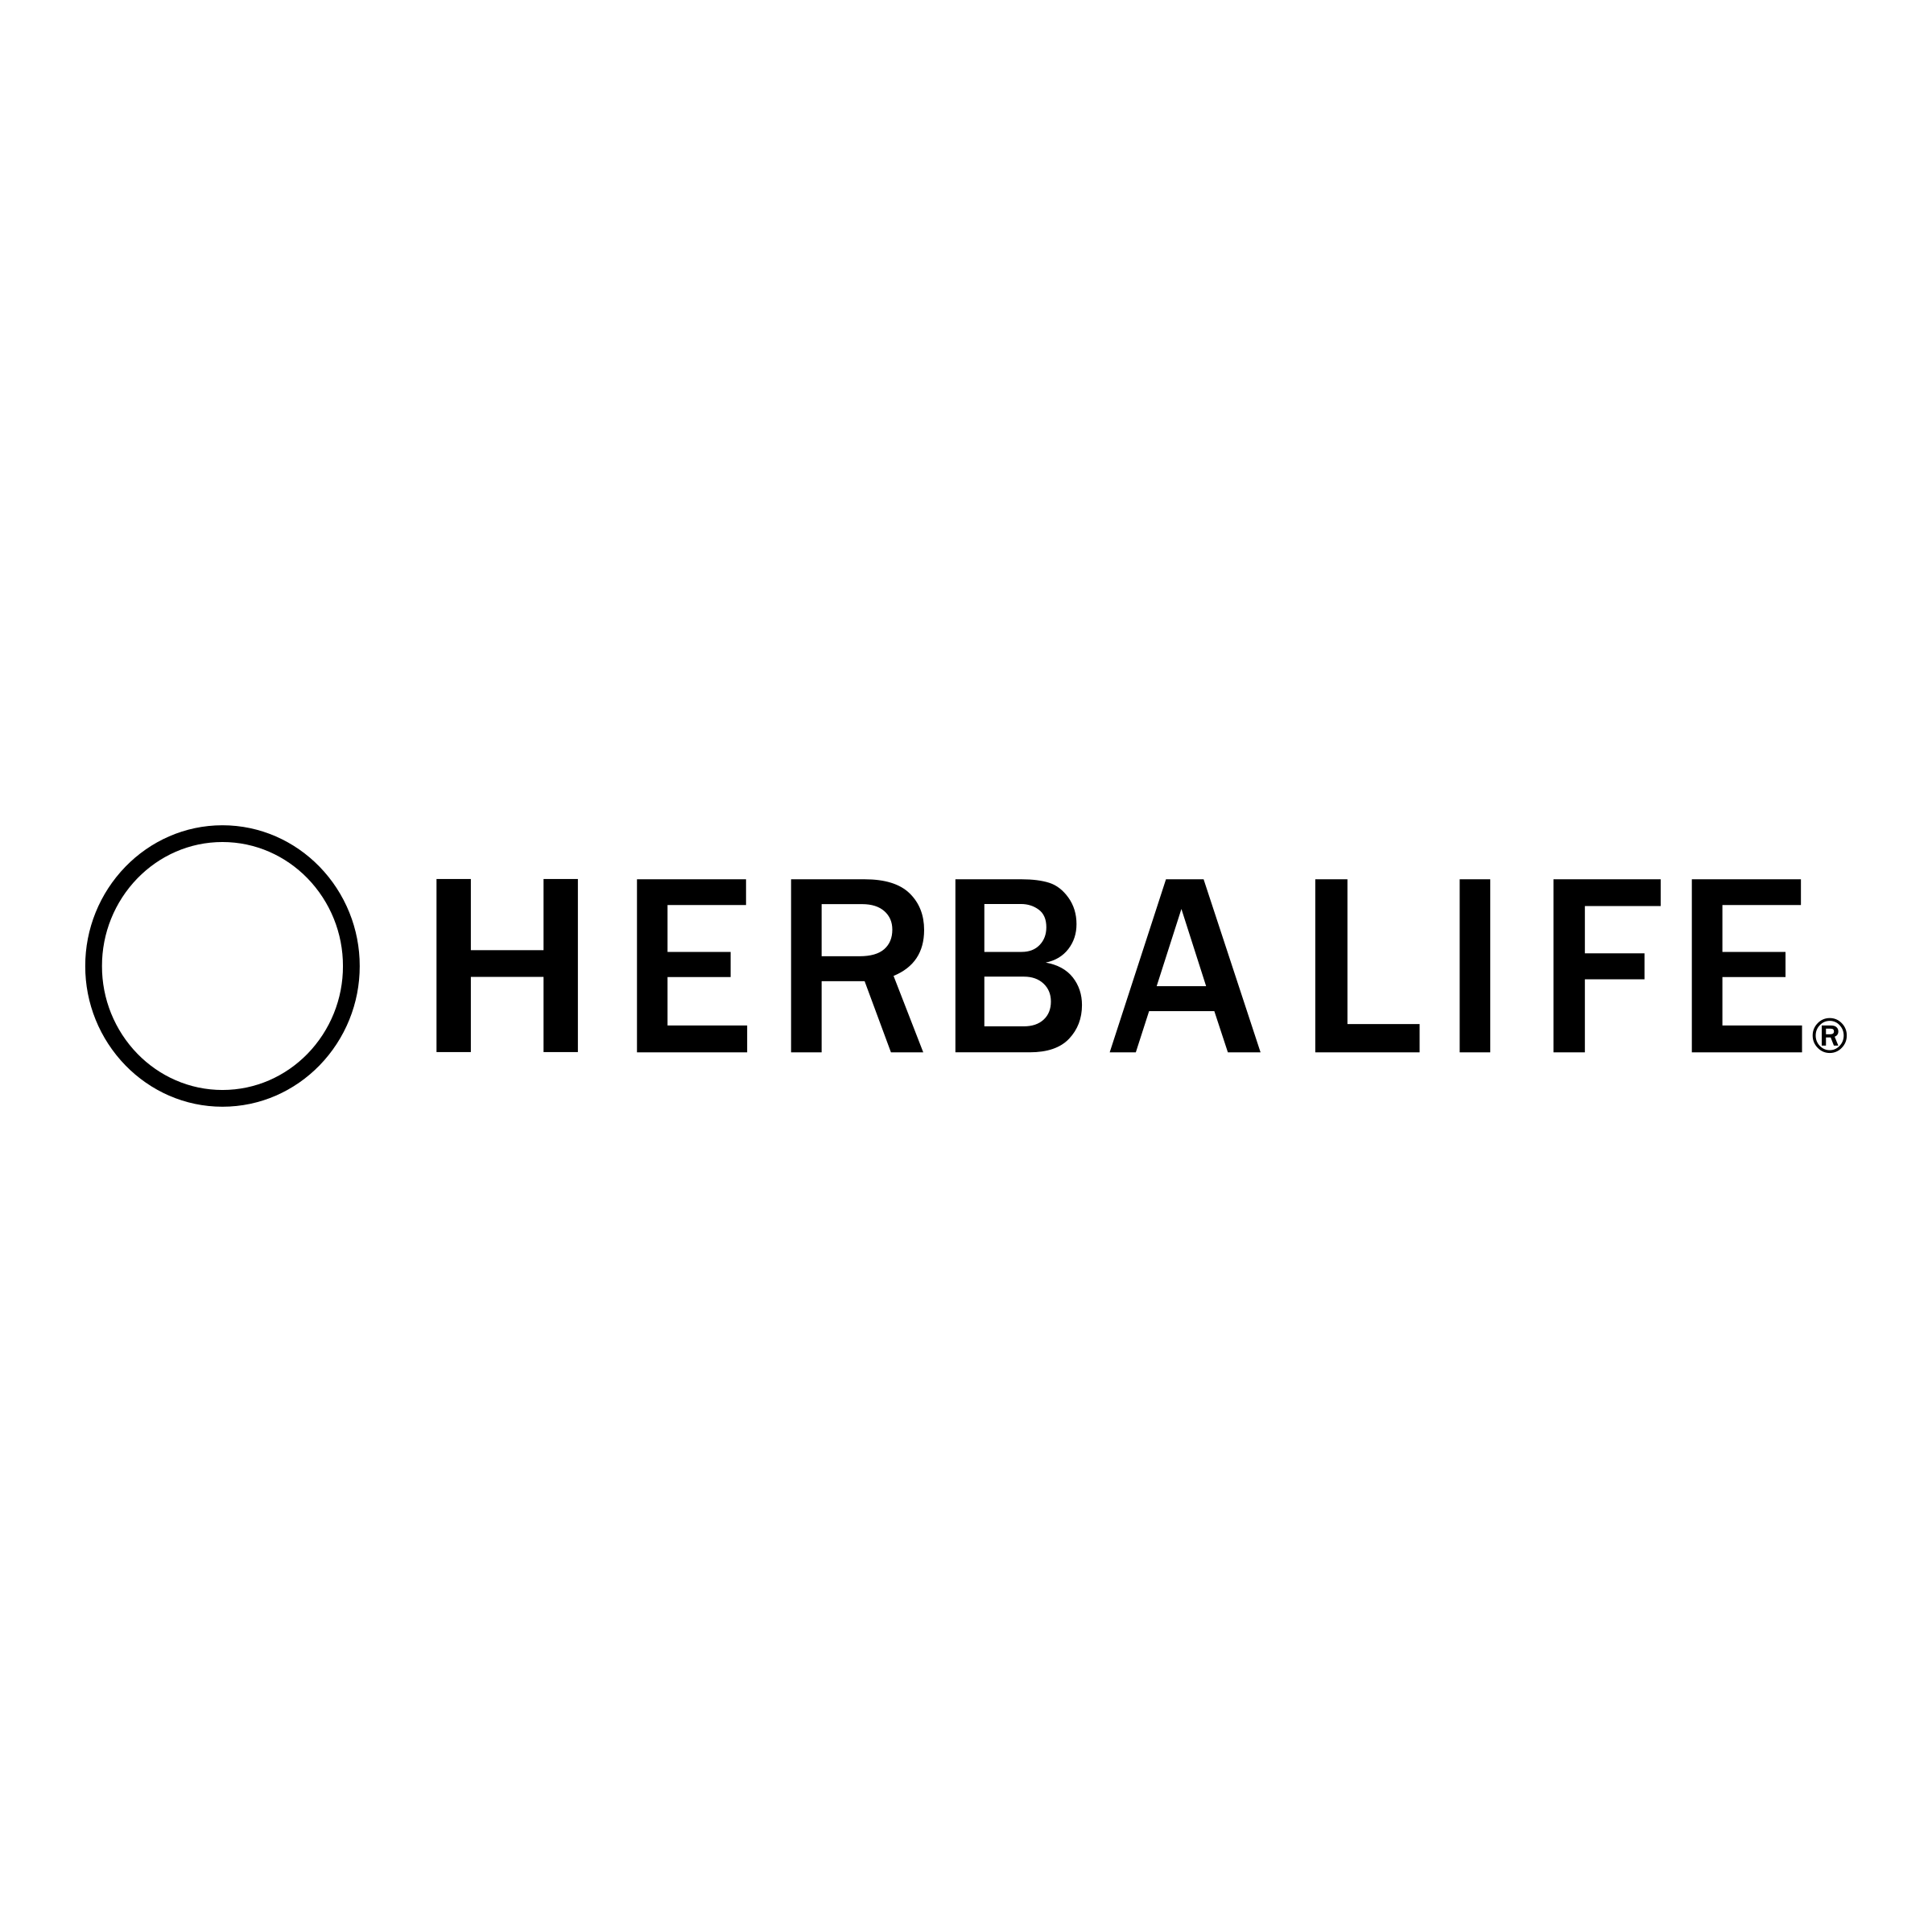 Herbalife Logo PNG Transparent & SVG Vector - Freebie Supply - Herbalife Designs